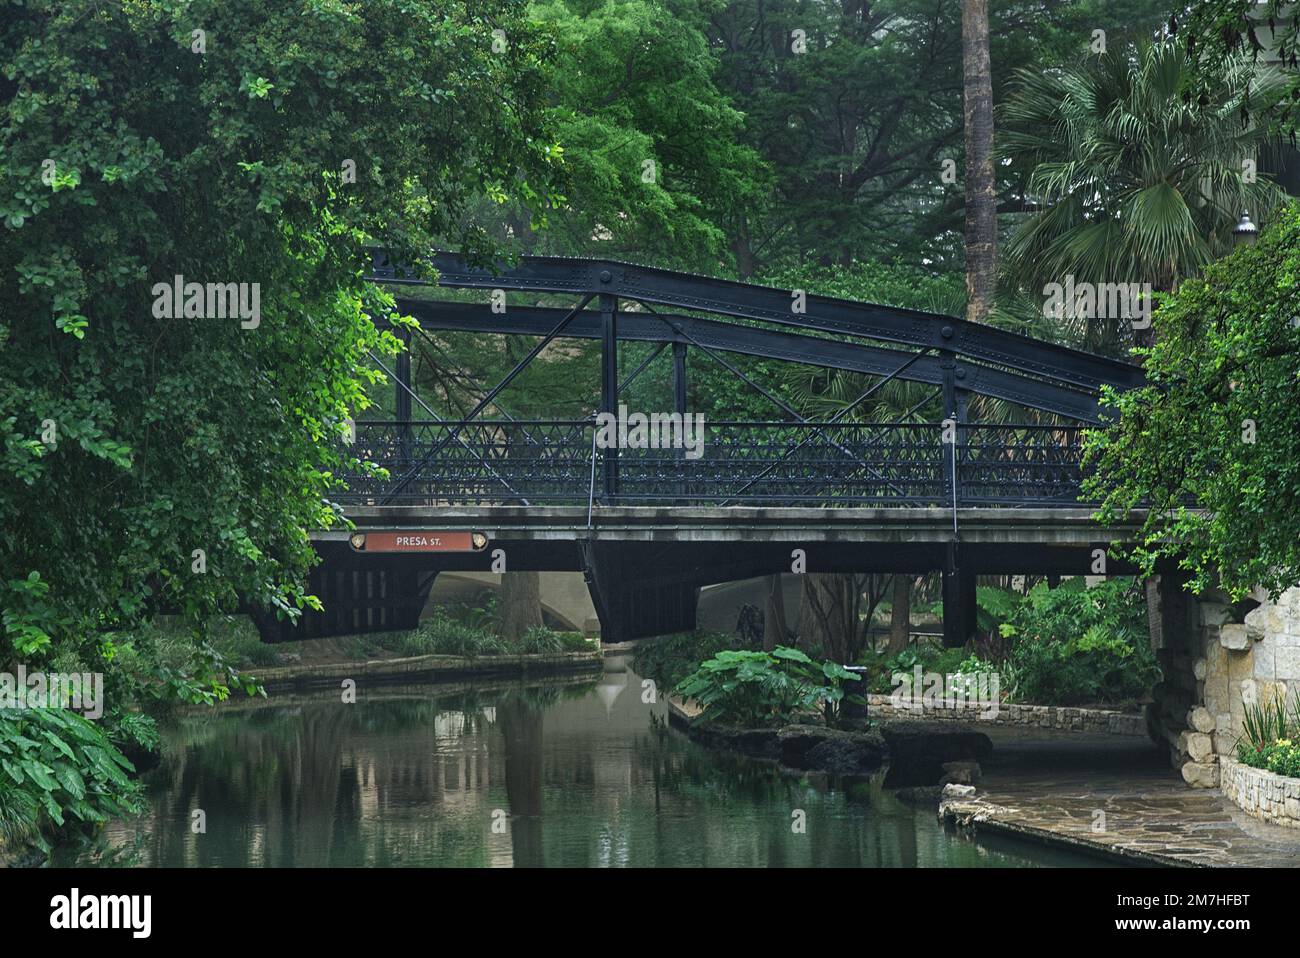 Presa Street Steel Bridge Foto stock - Alamy